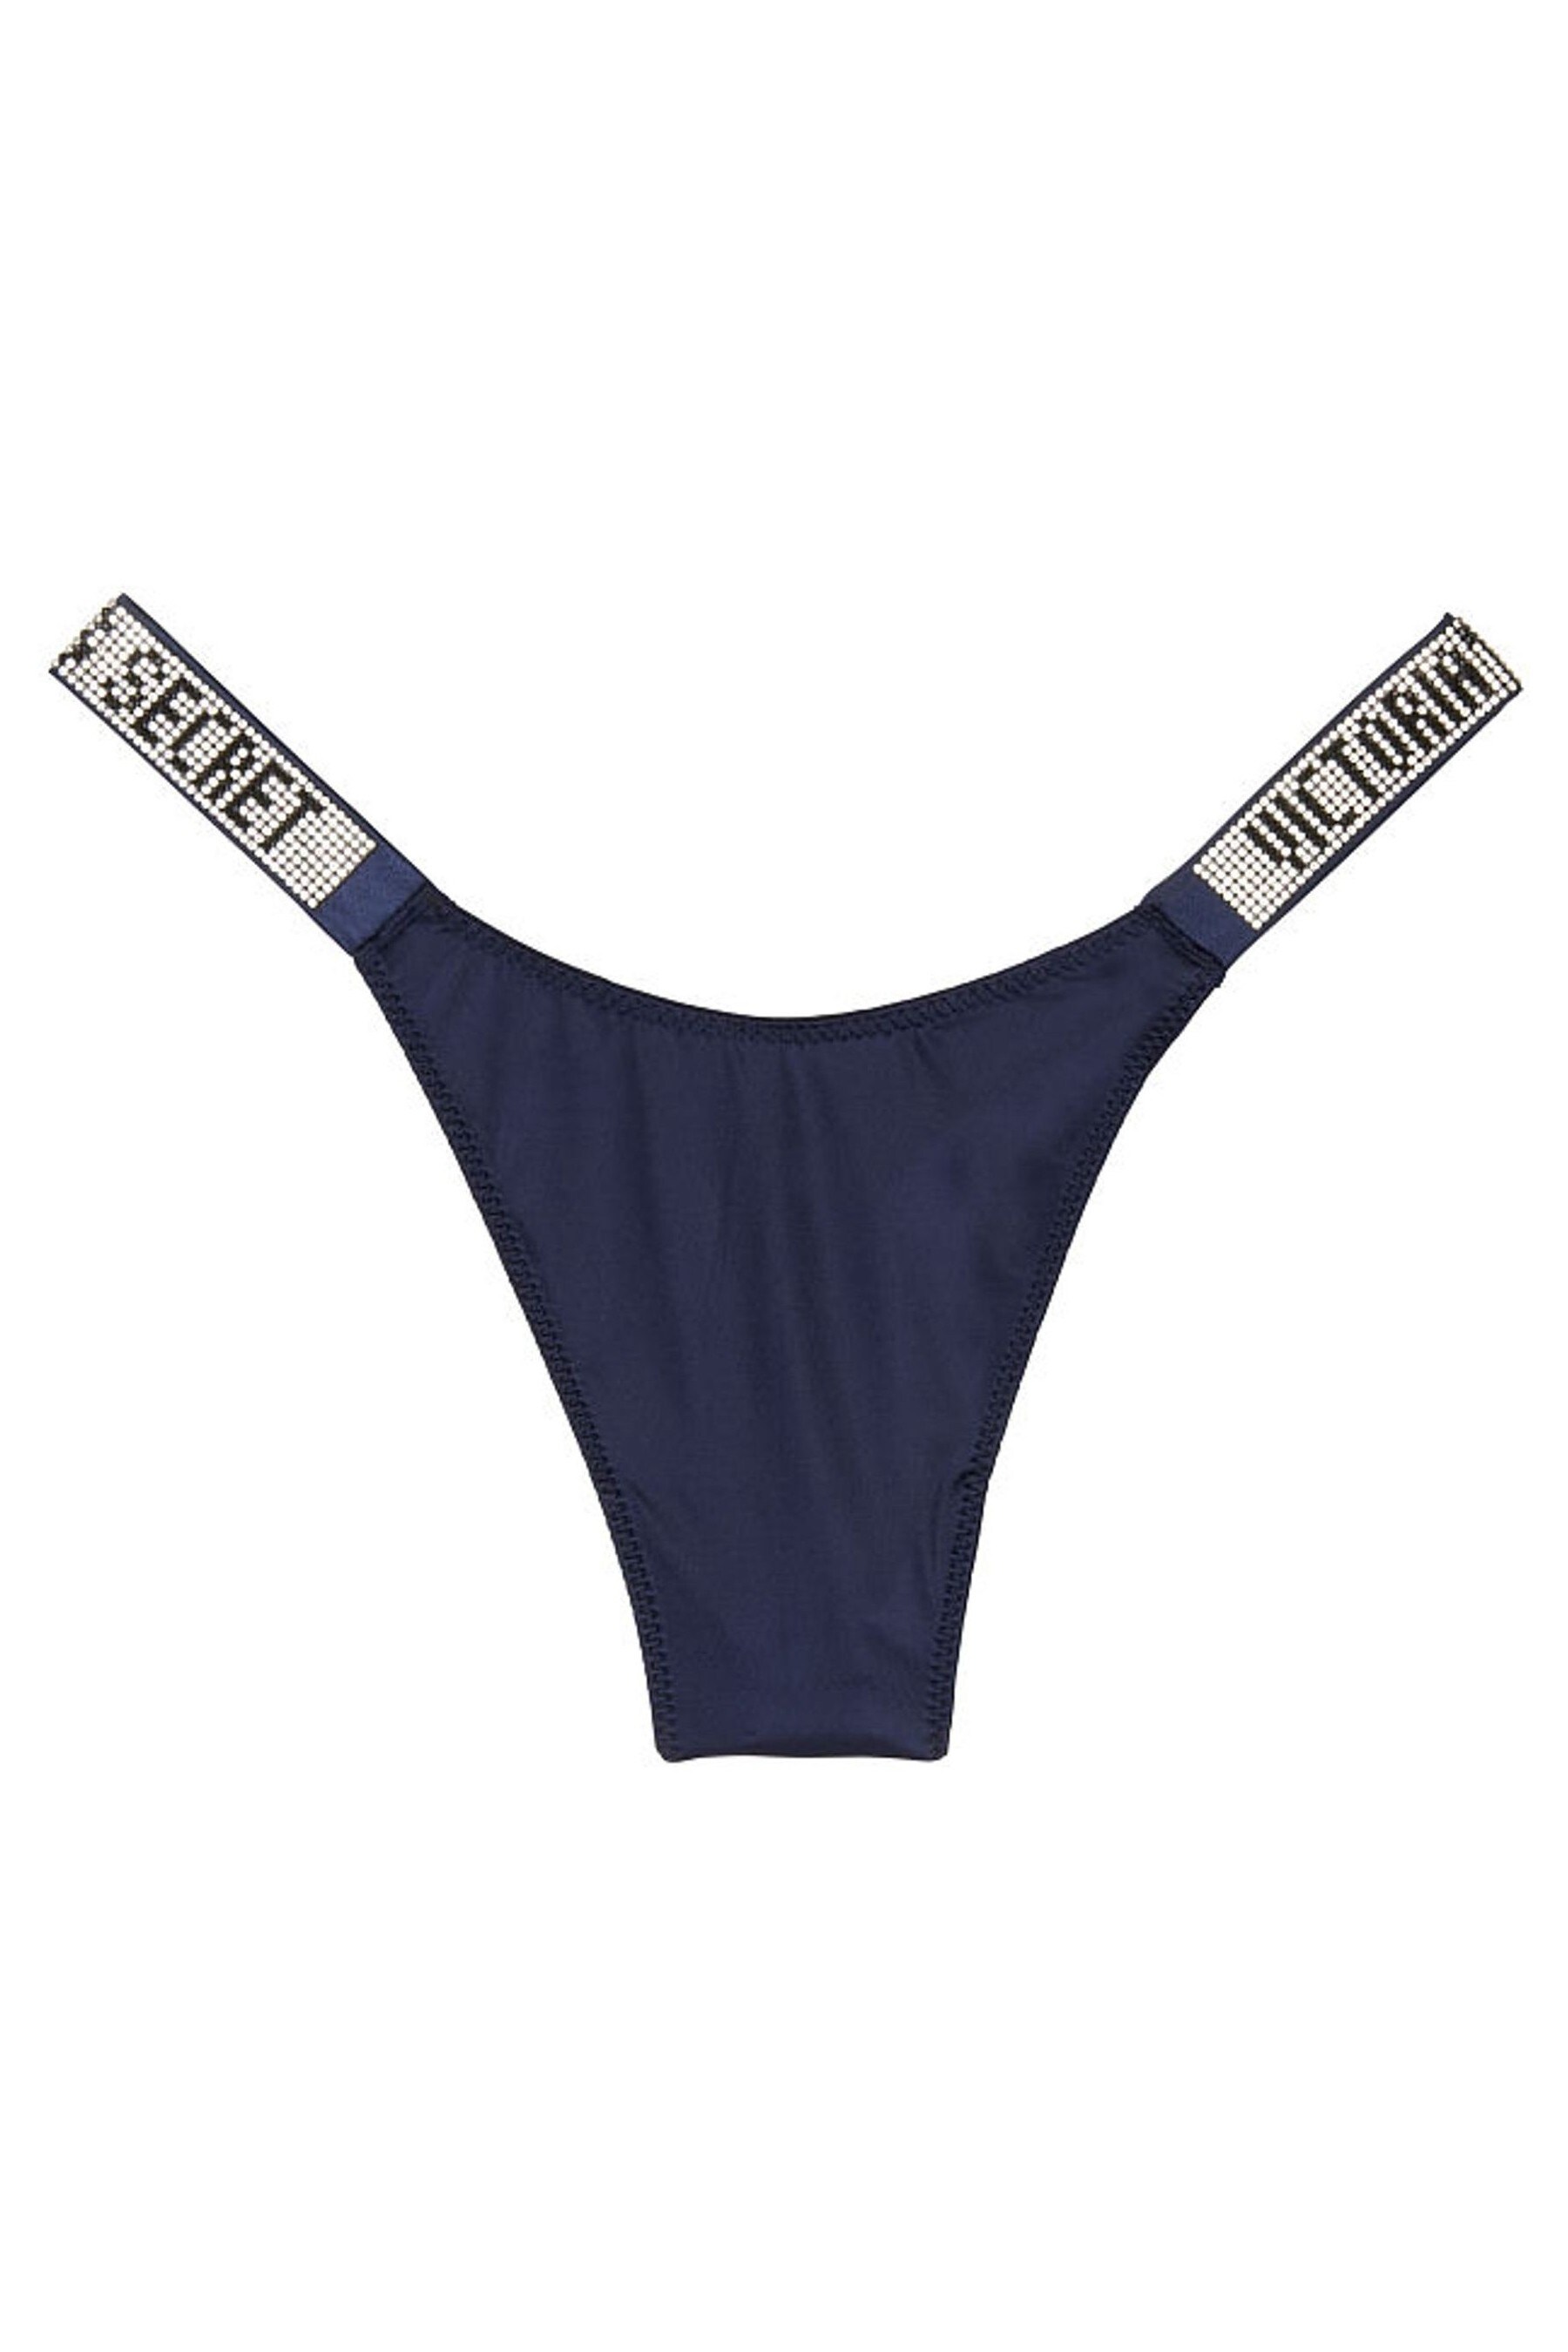 Buy Victorias Secret Noir Navy Blue Smooth Shine Strap Thong Panty 